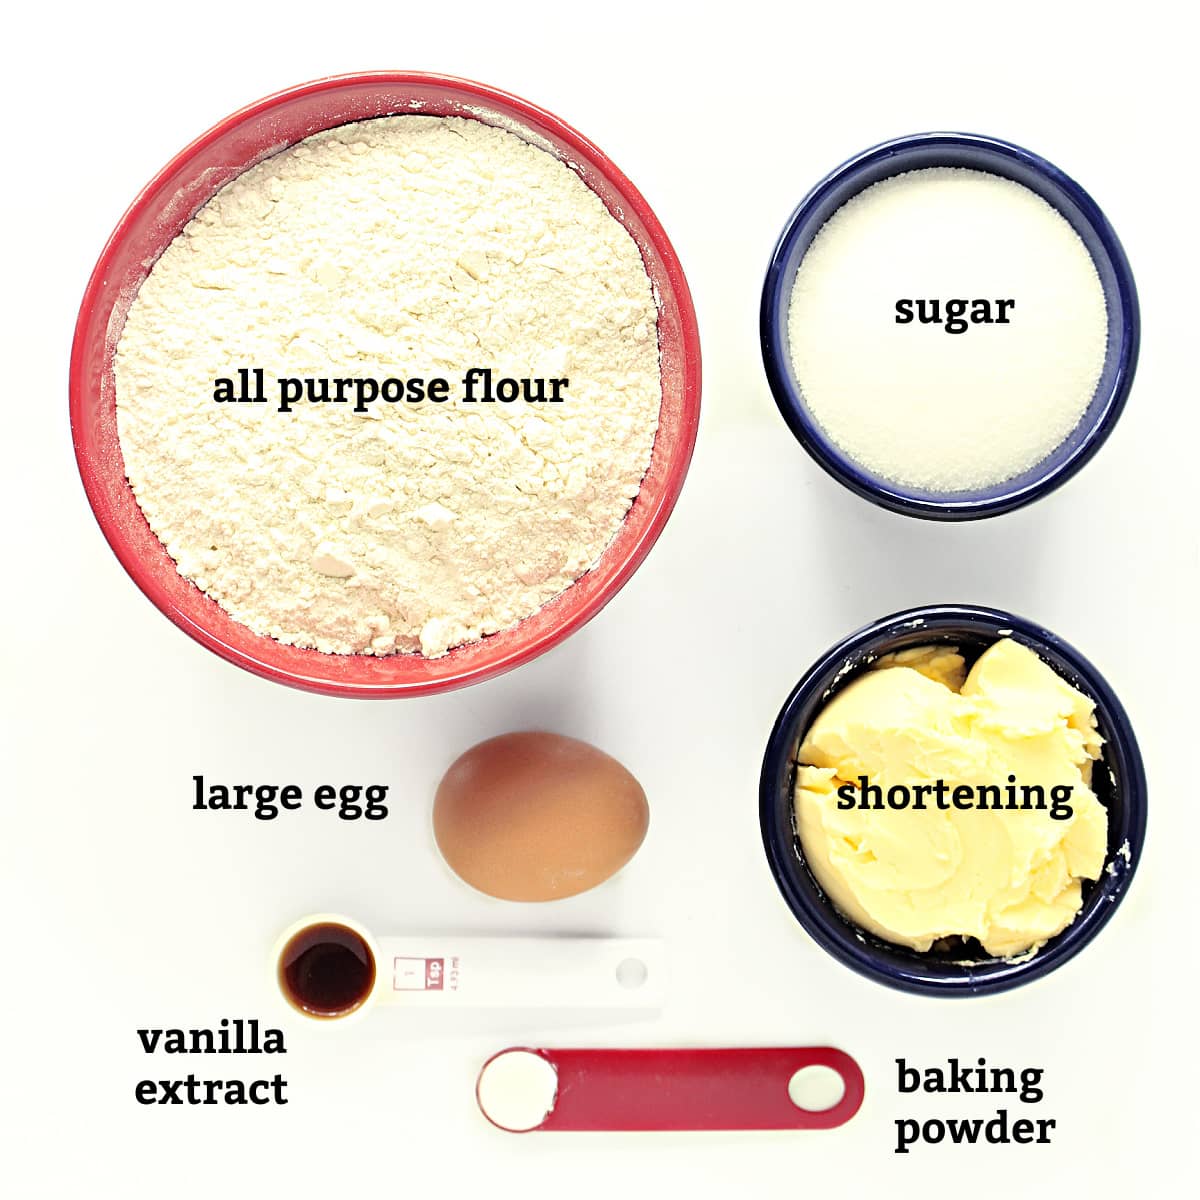 Ingredients labeled: flour, sugar, egg, shortening, vanilla, baking powder.